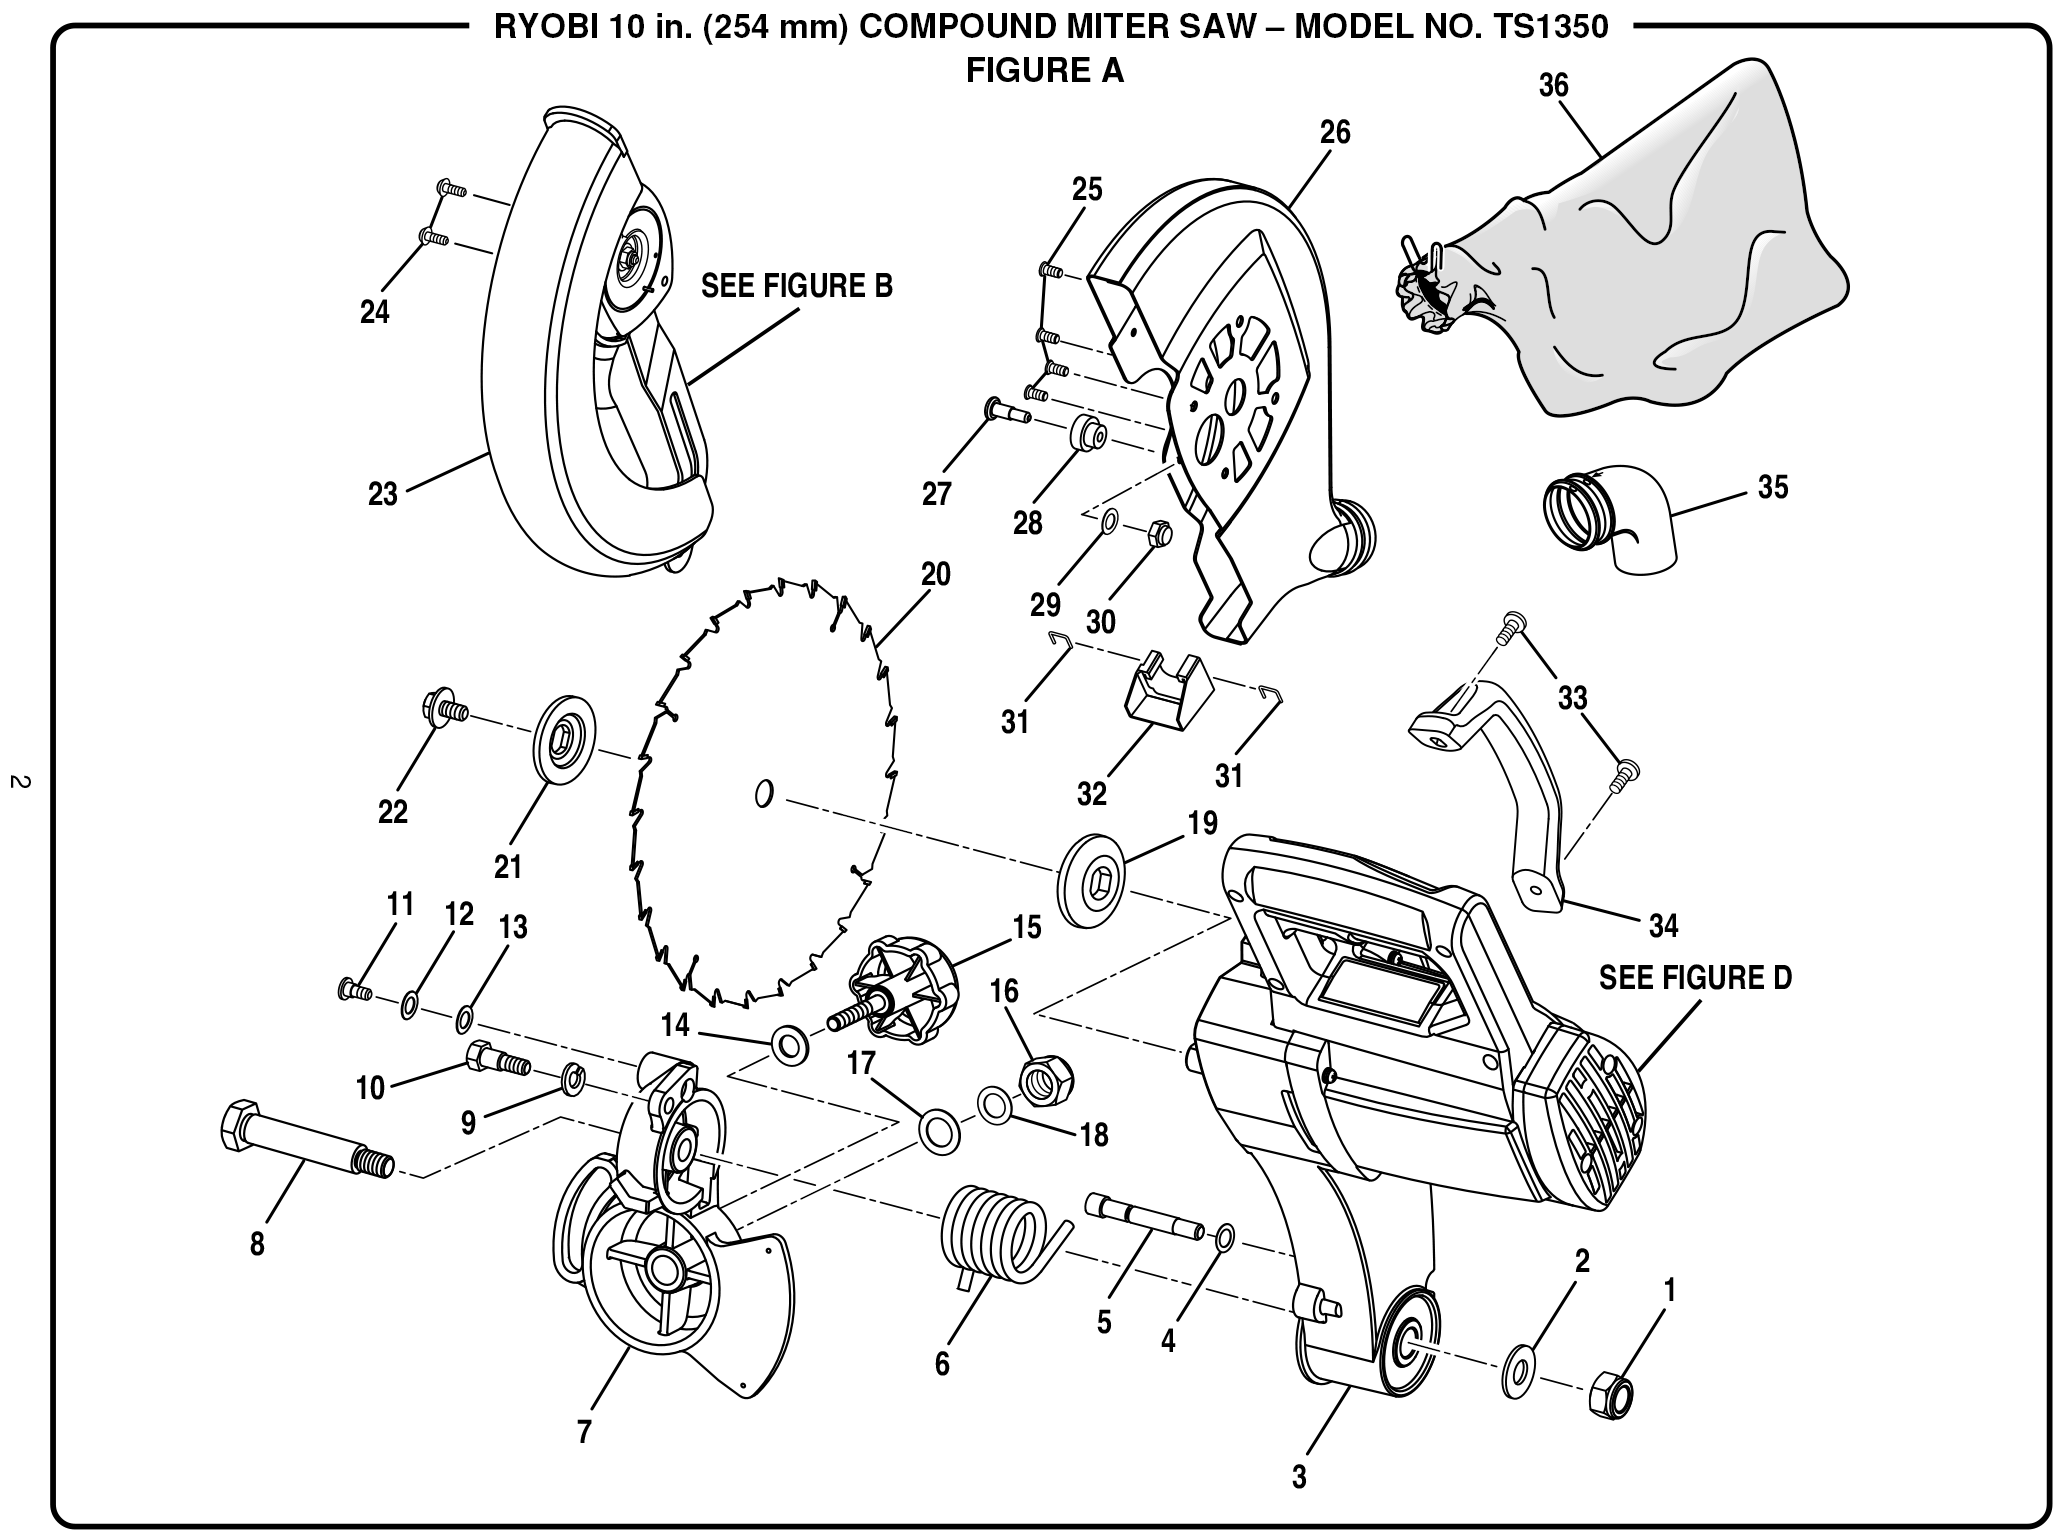 Ryobi Miter Saw Parts Diagram